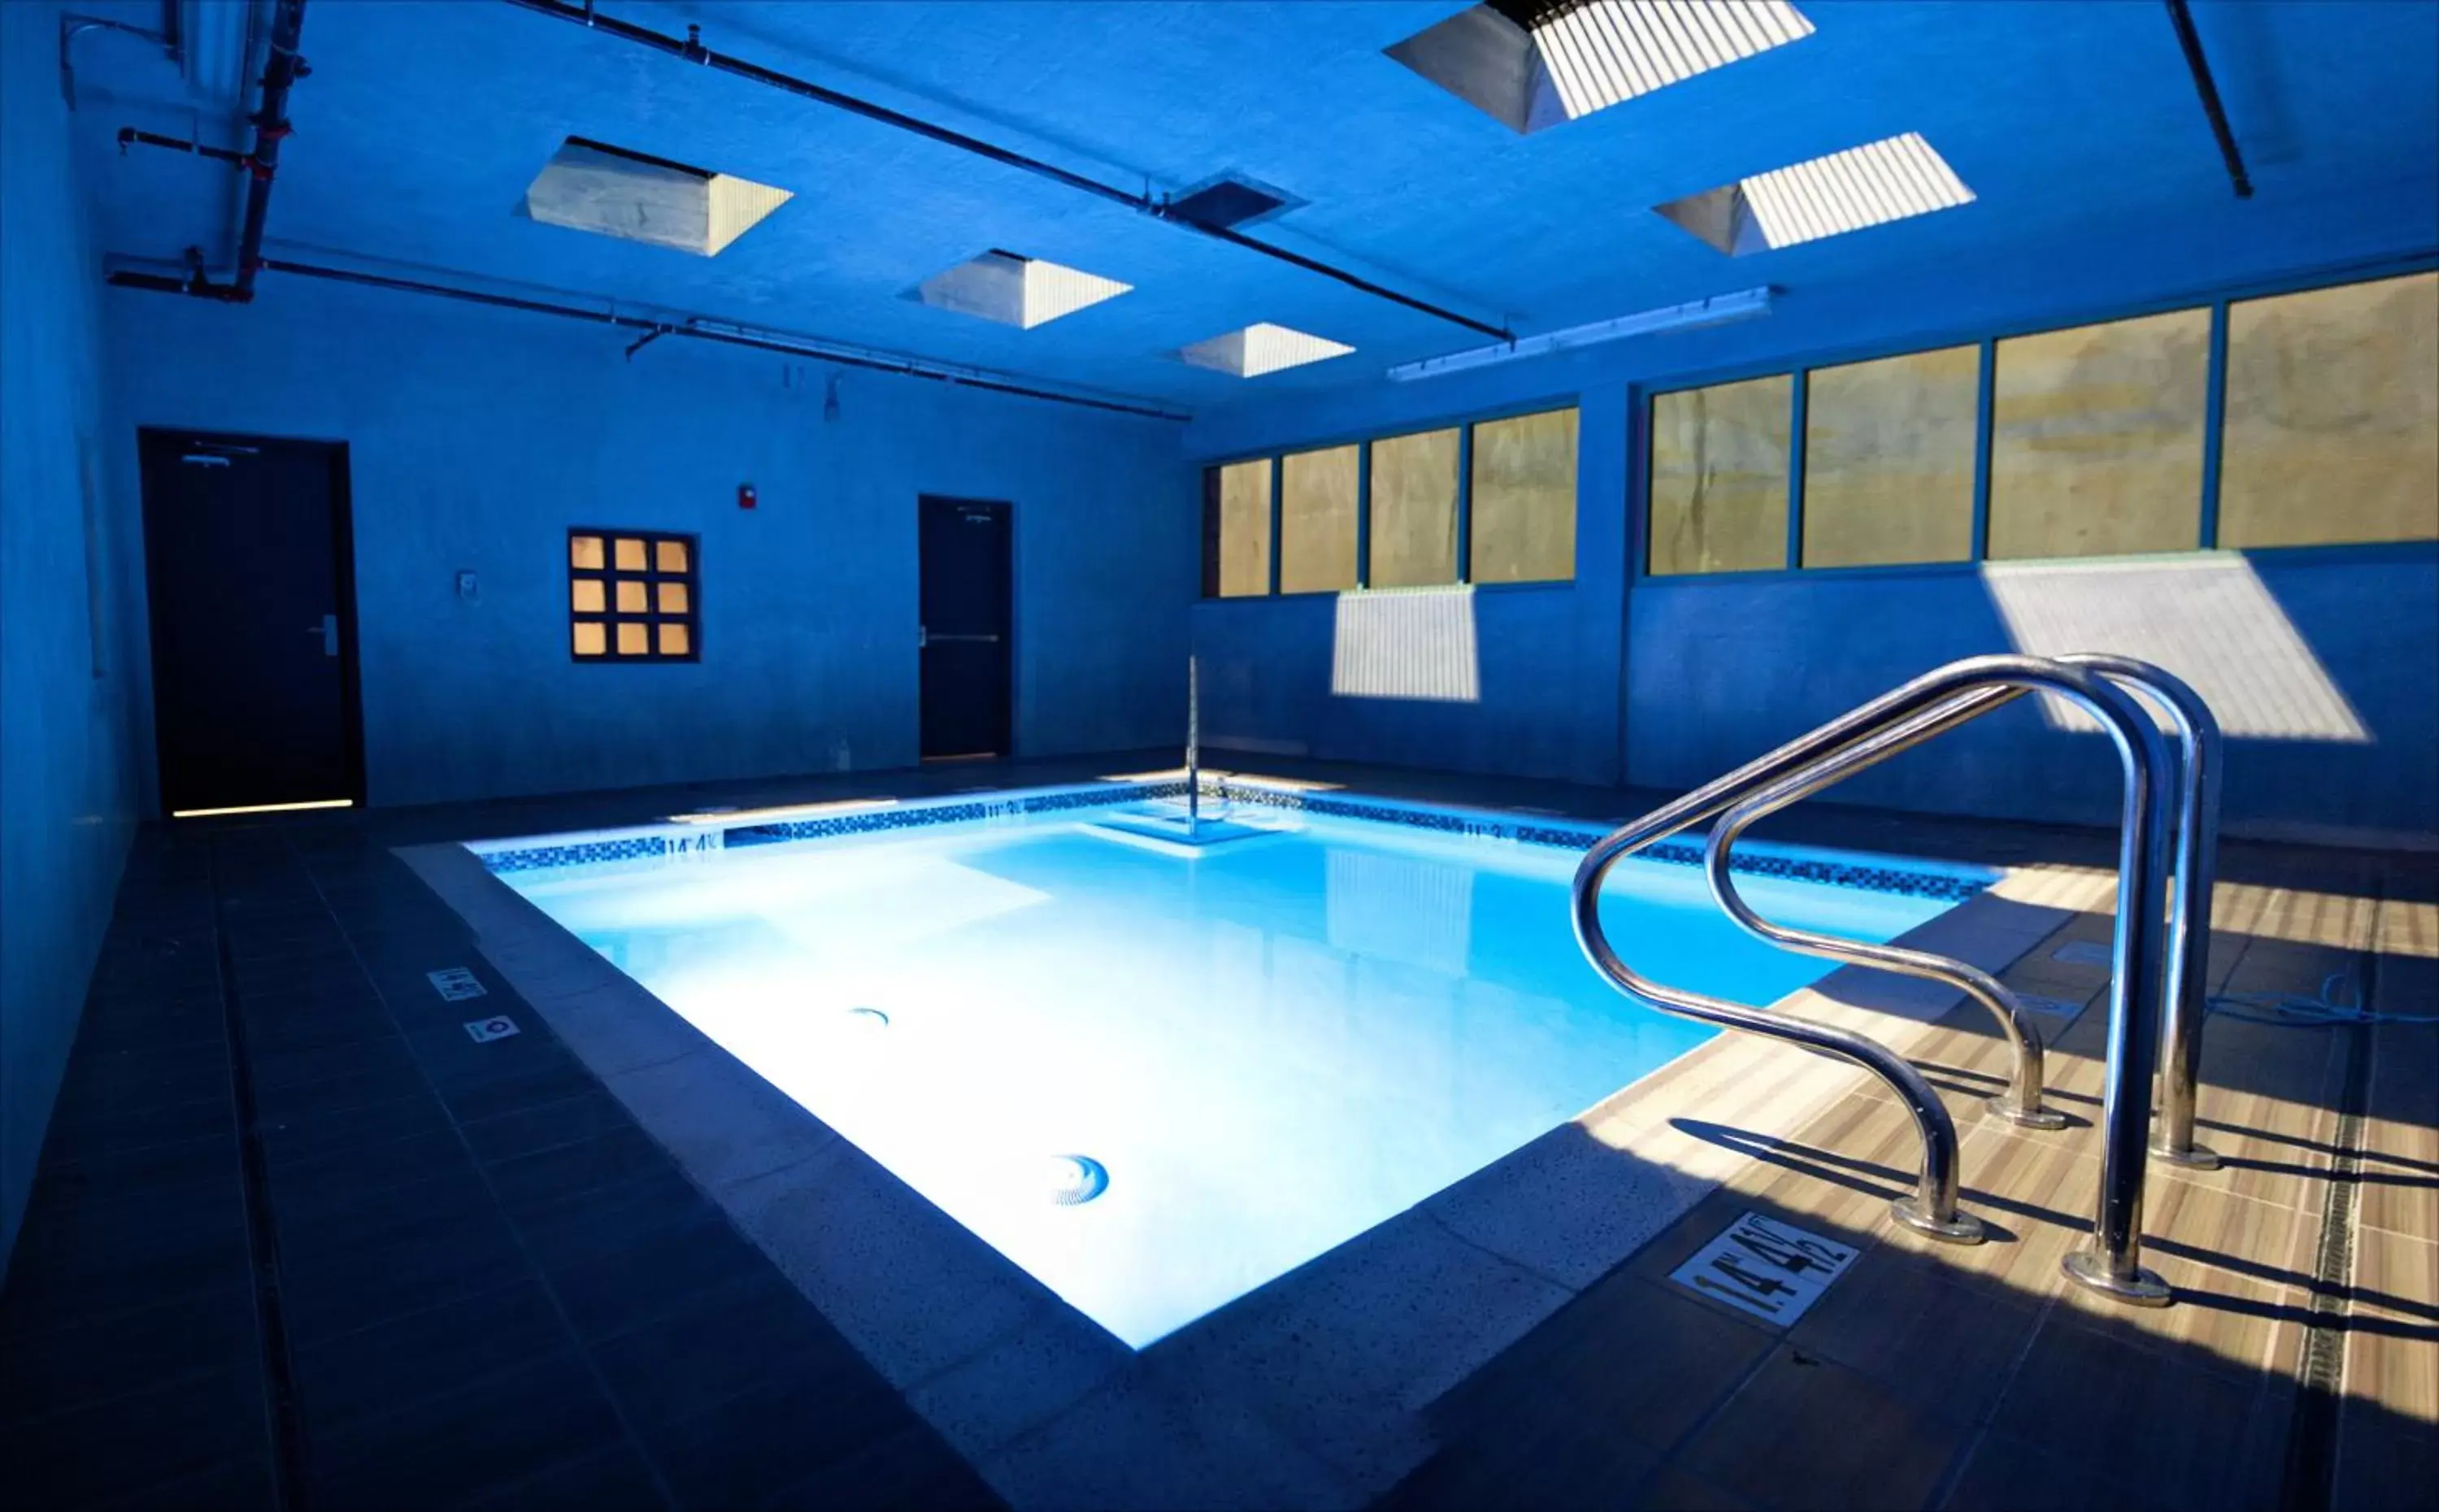 Swimming Pool in BLVD Hotel & Studios- Walking Distance to Universal Studios Hollywood